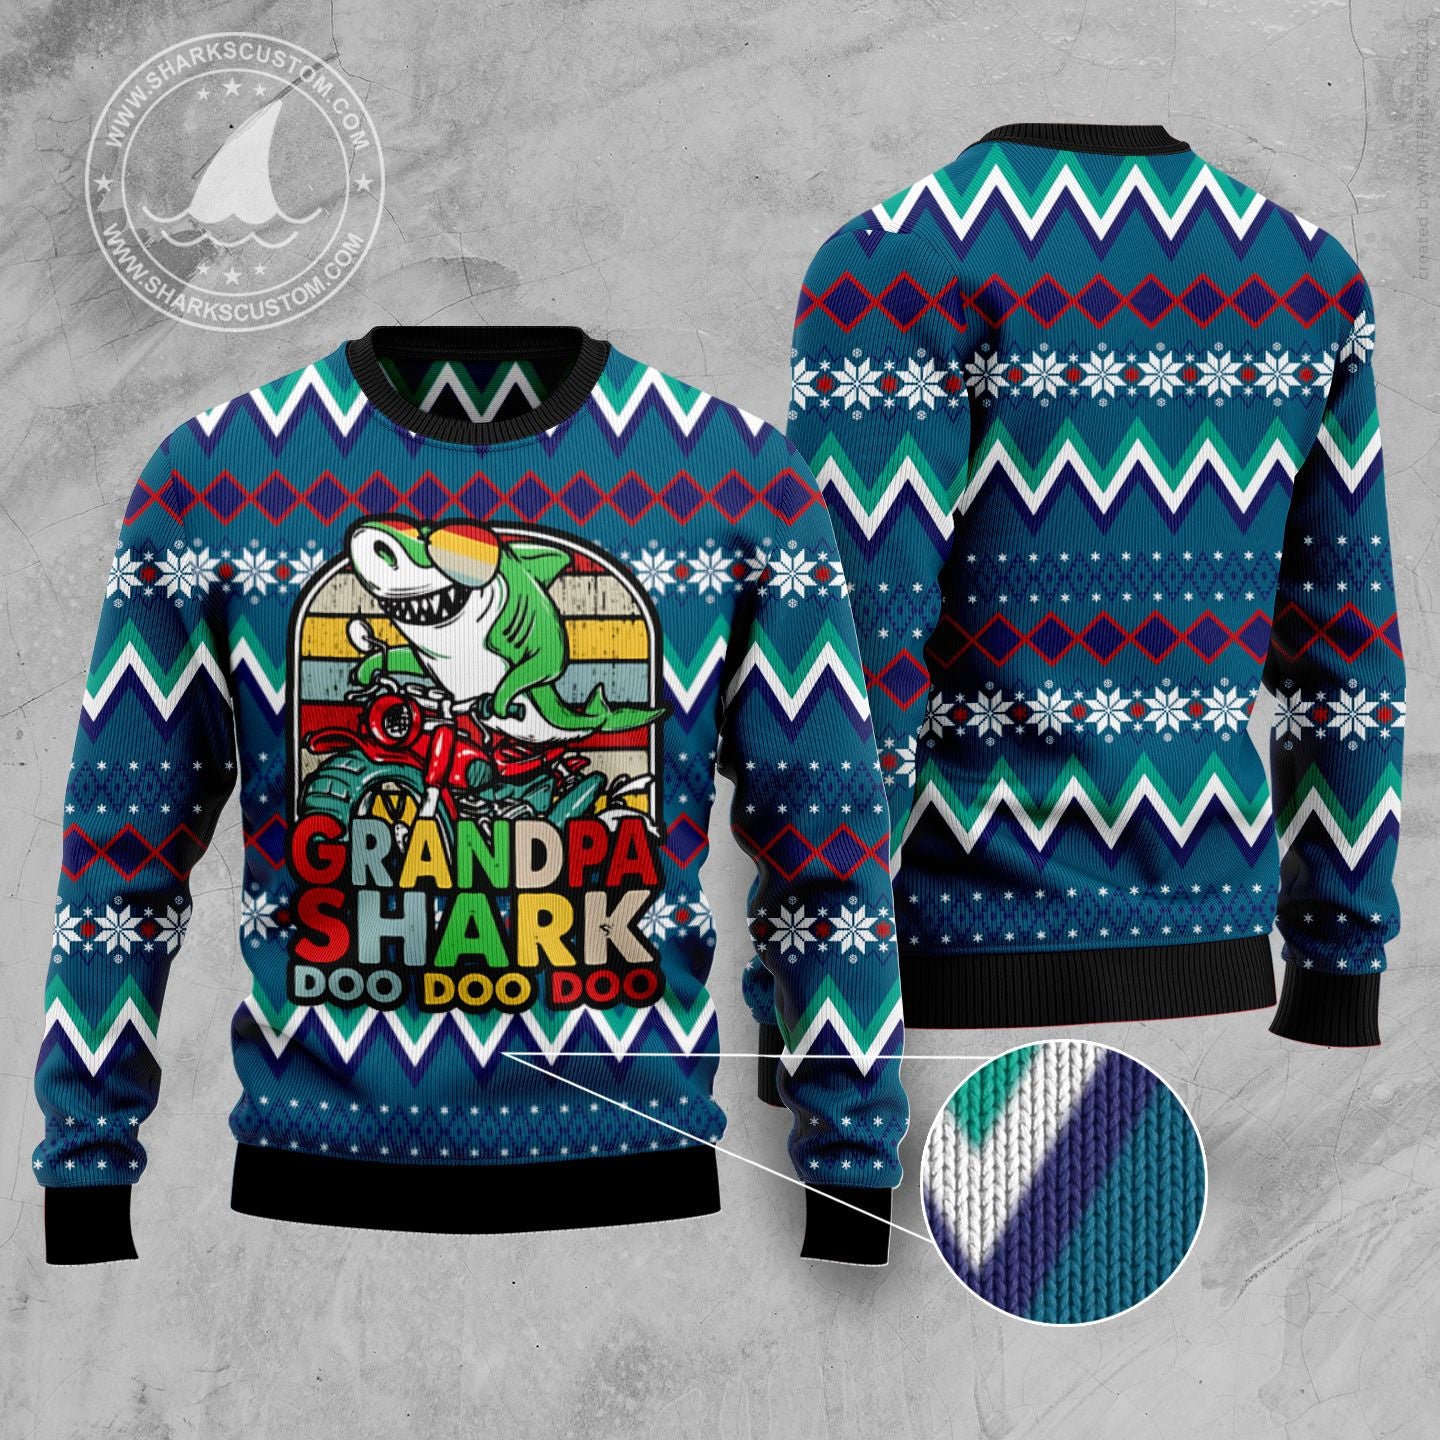 Grandpa Shark Dododo TY299 Ugly Christmas Sweater